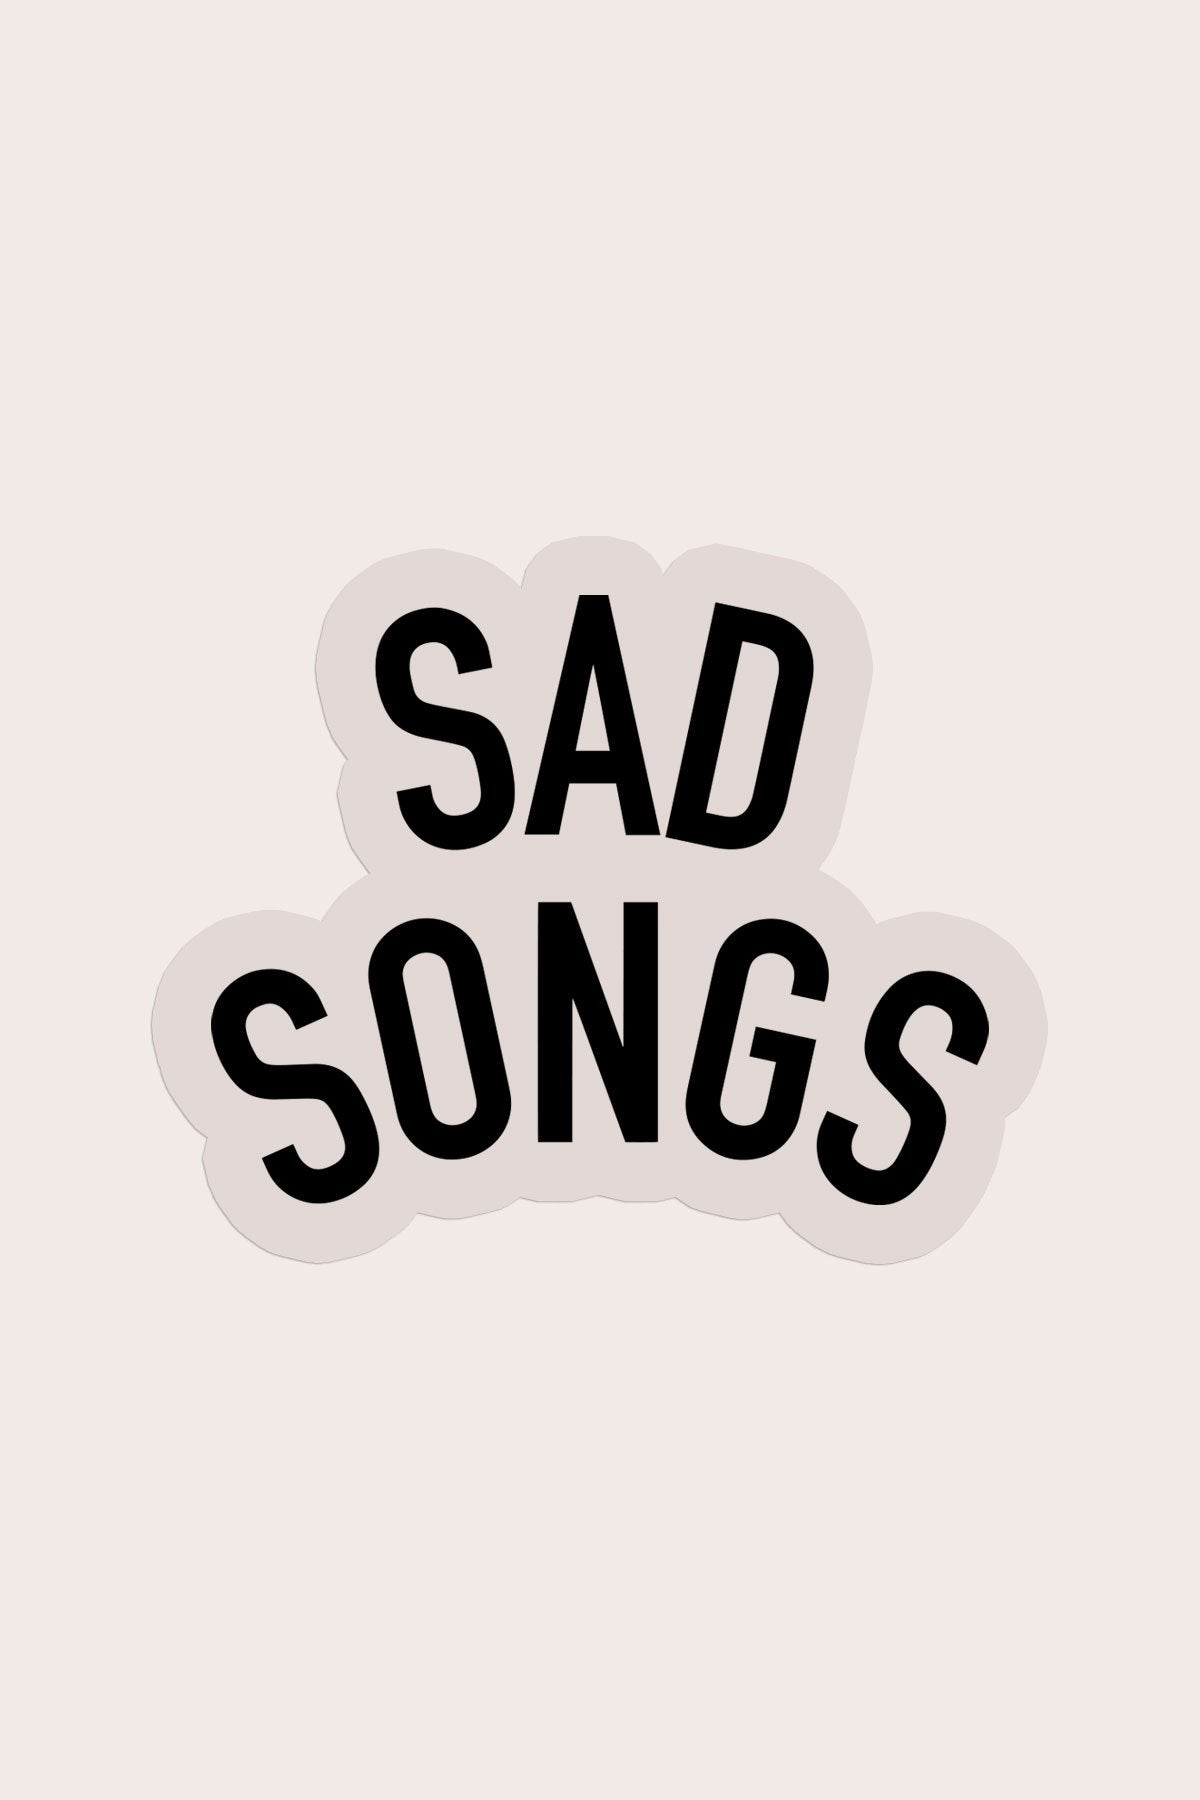 Sad Songs Clear Vinyl Sticker